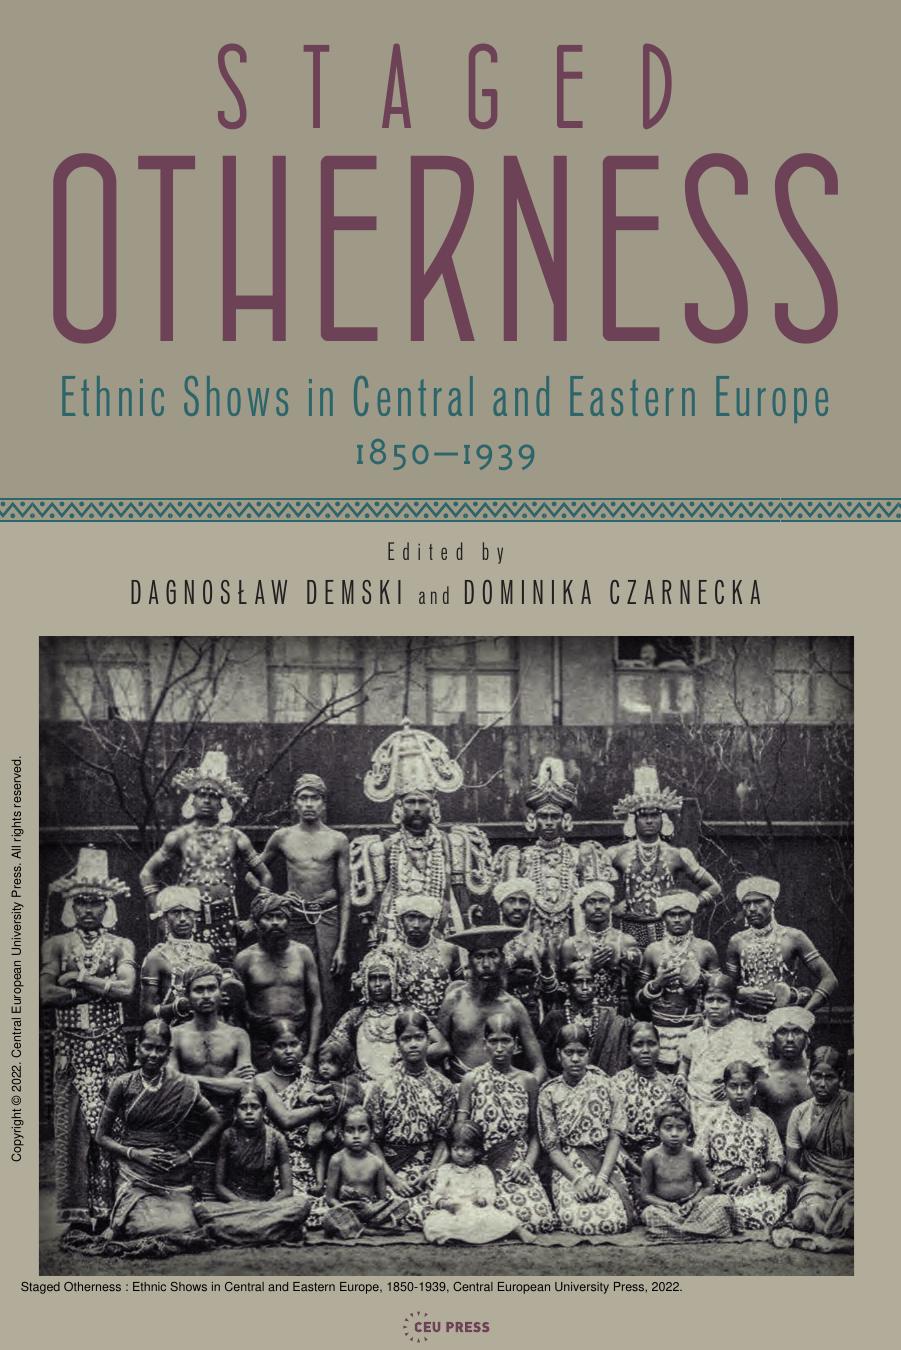 Staged Otherness : Ethnic Shows in Central and Eastern Europe, 1850-1939 by Dagnosław Demski; Dominika Czarnecka